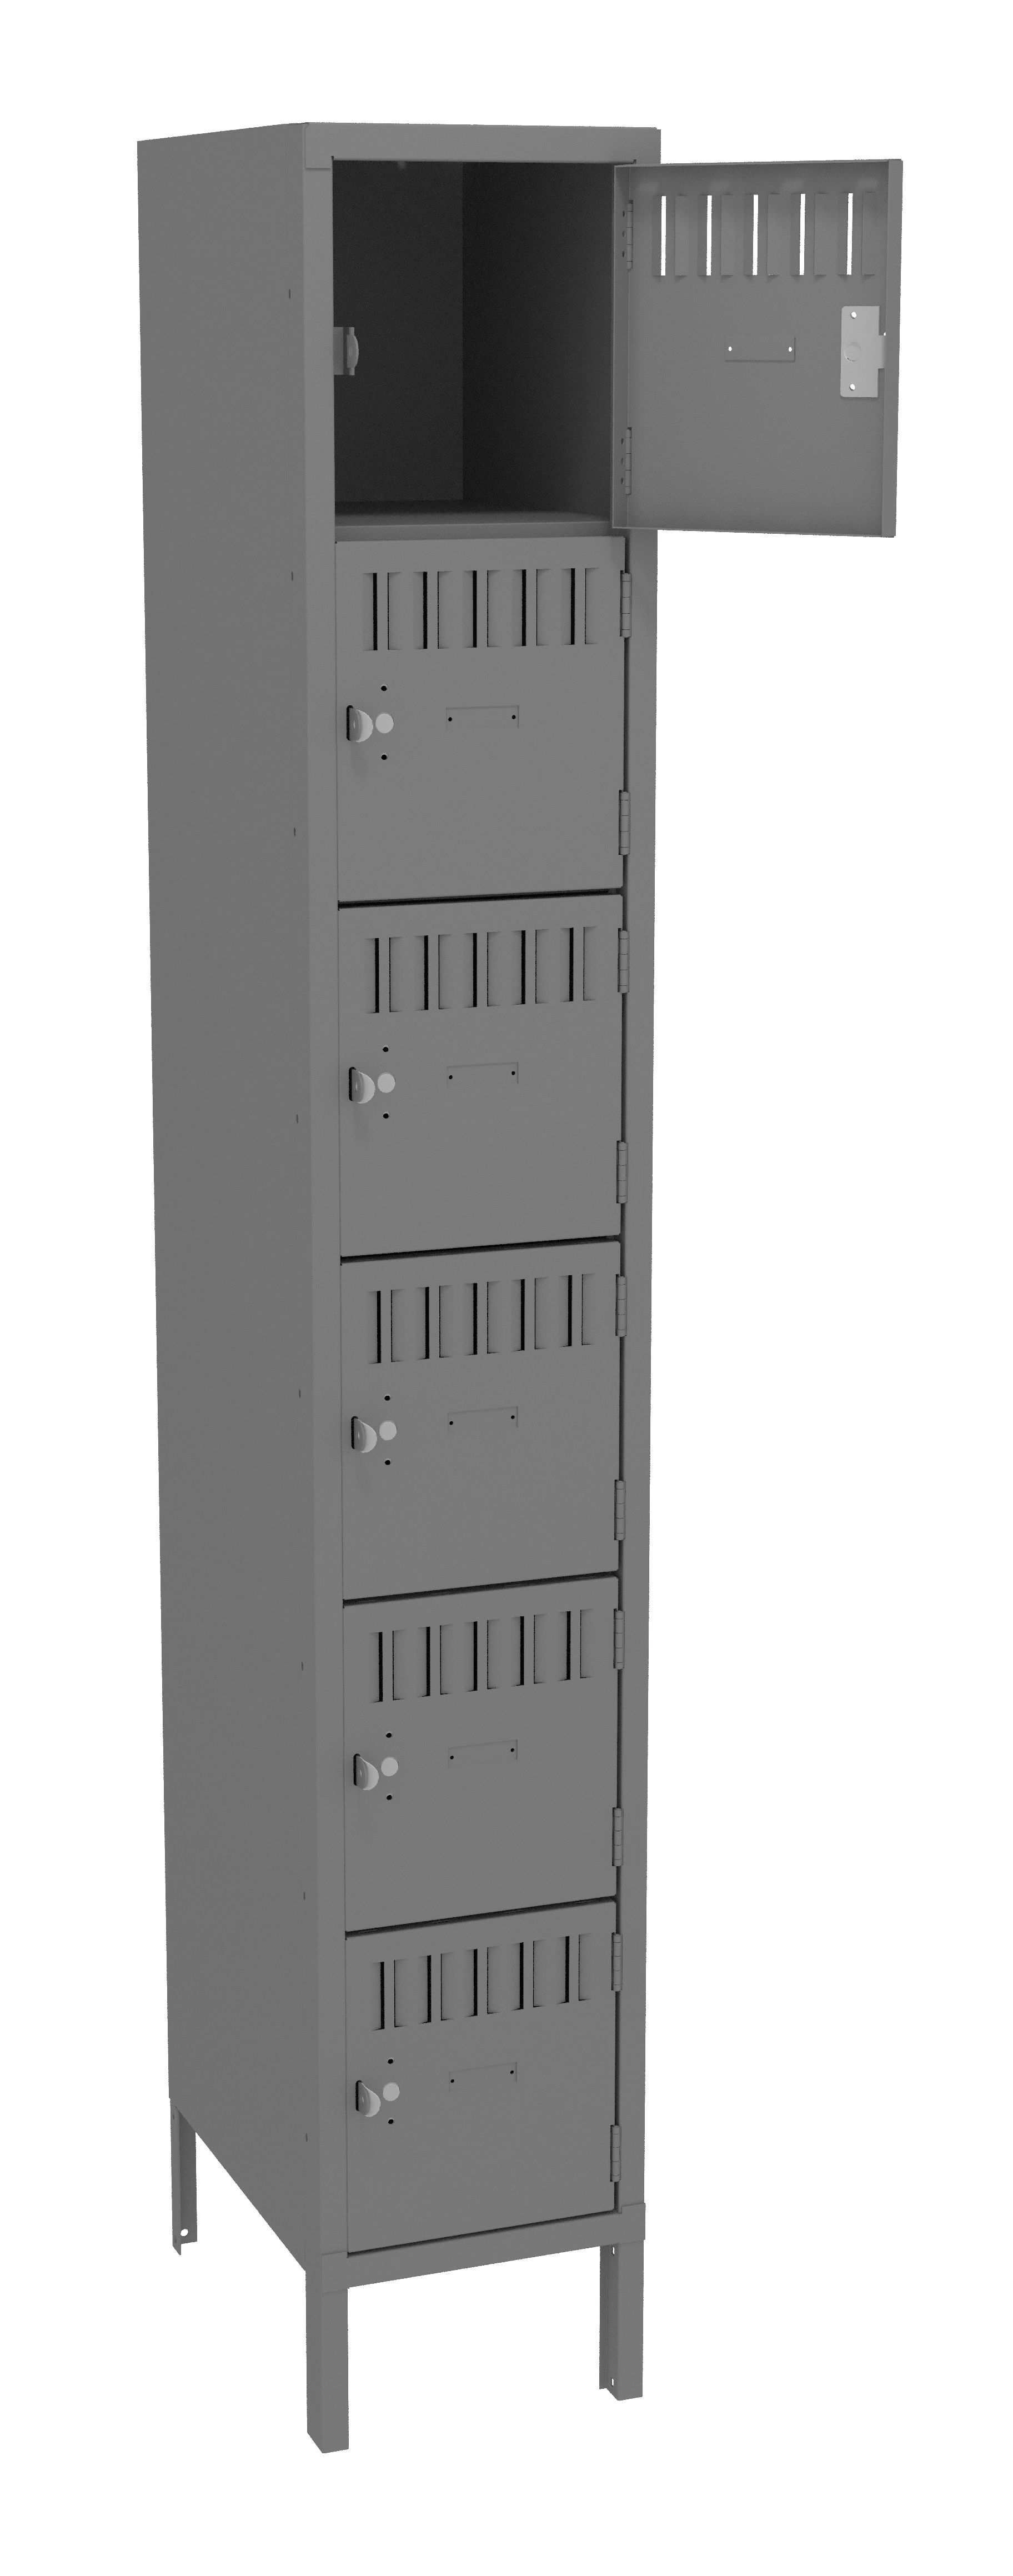 Tennsco Box Compartments With Legs, Single Stack, 12w X 18d X 78h, Medium Gray BS6-121812-1-MGY, Tennsco Box Compartments With Legs, Single Stack, 12w X 18d X 78h, Medium Gray